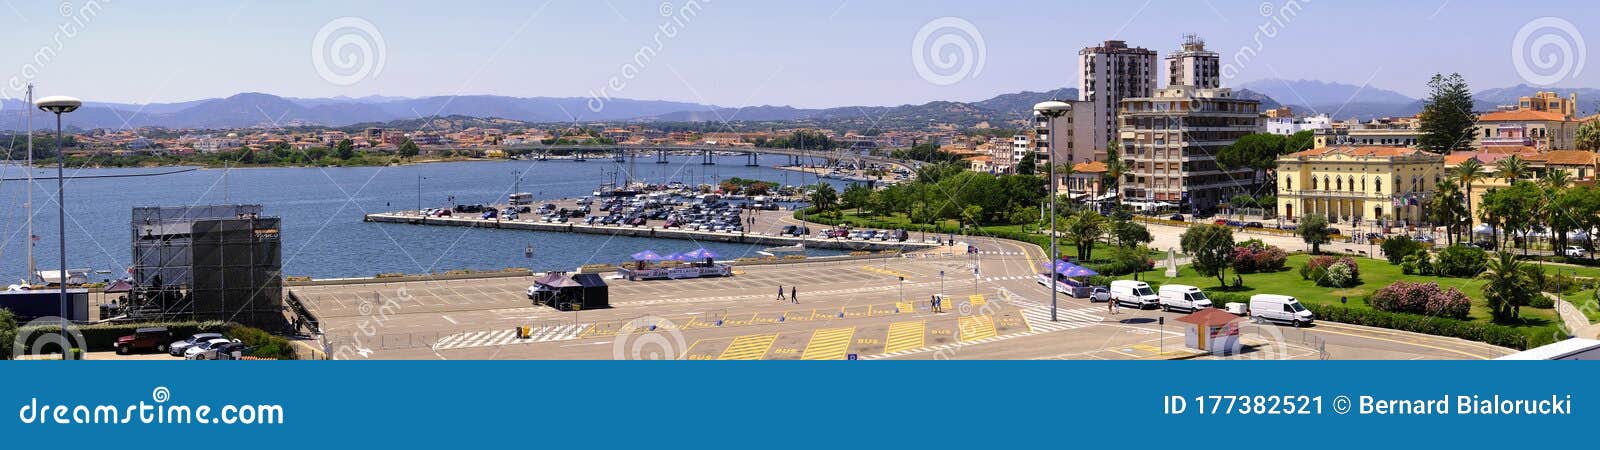 olbia, sardinia / italy - 2019/07/21: panoramic view of olbia port and yacht marina shore area with citi hall - municipio di olbia